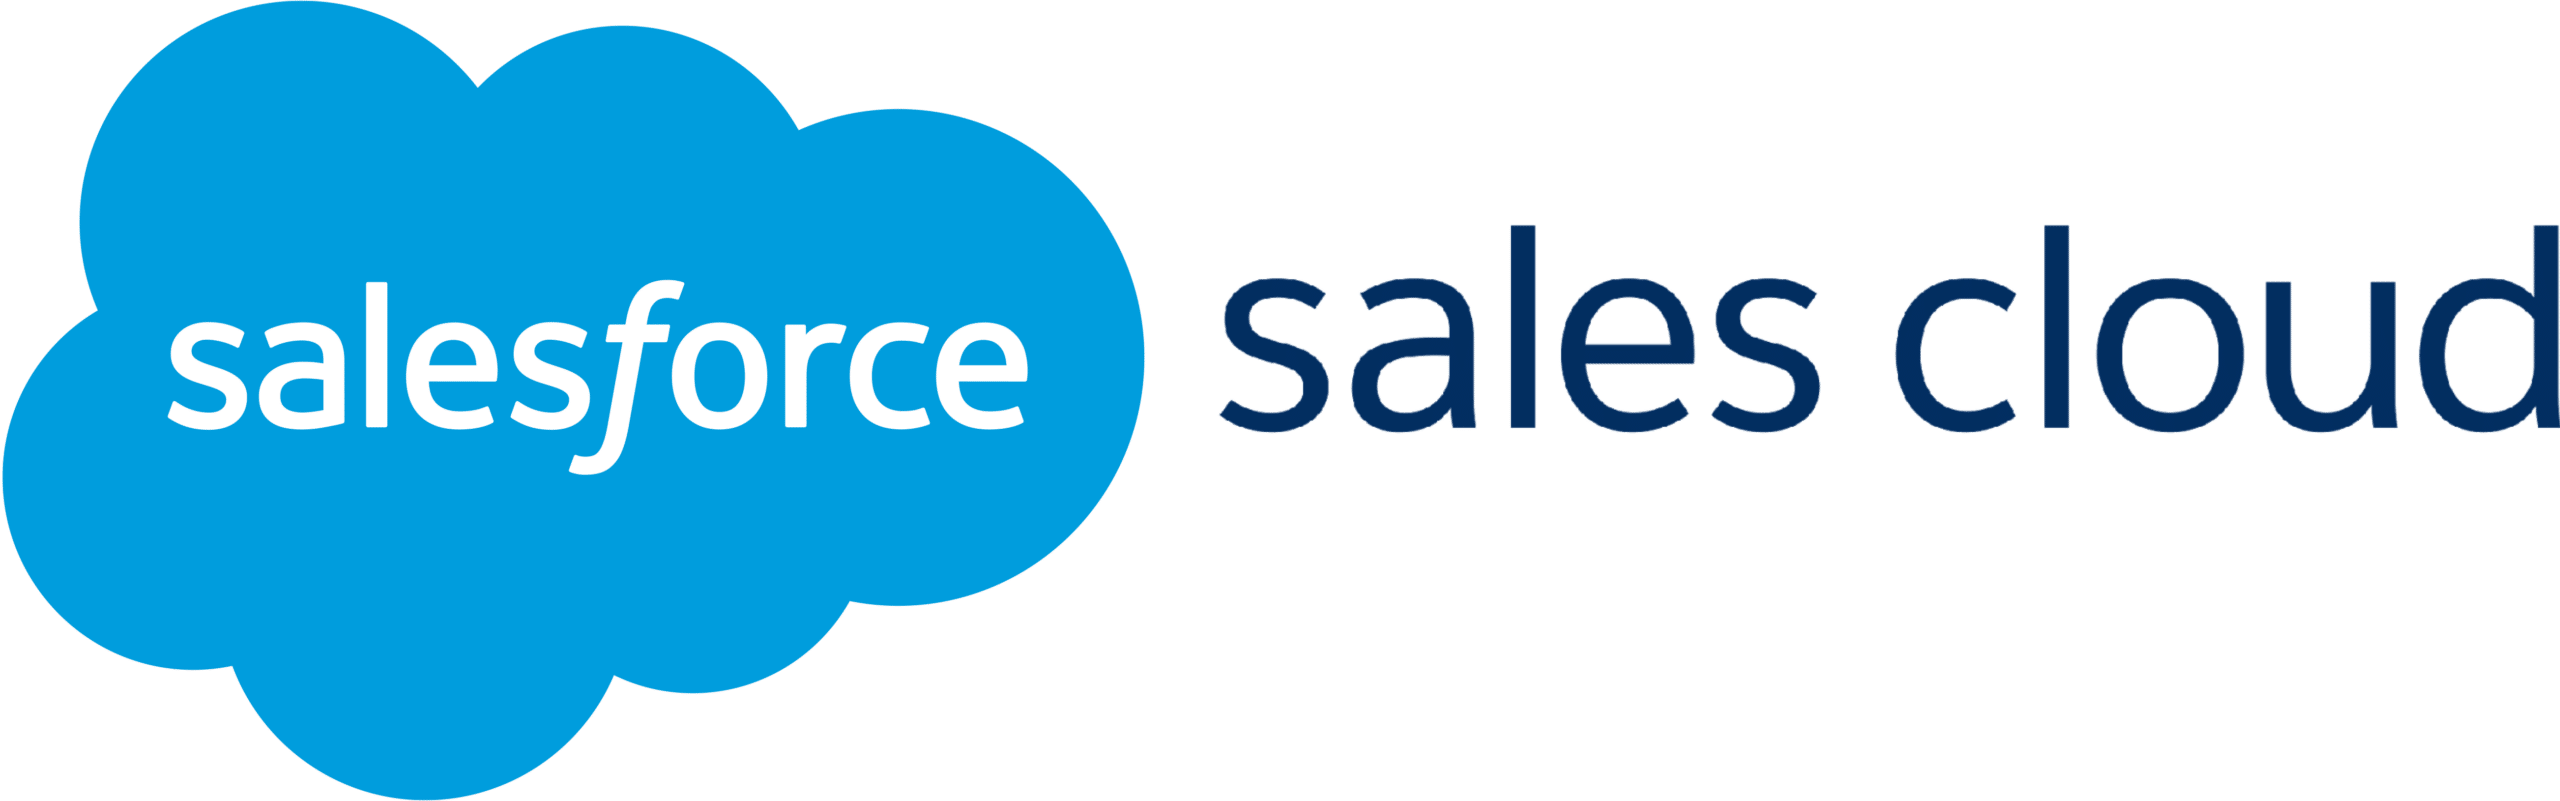 Salesforce logotipo da nuvem de vendas